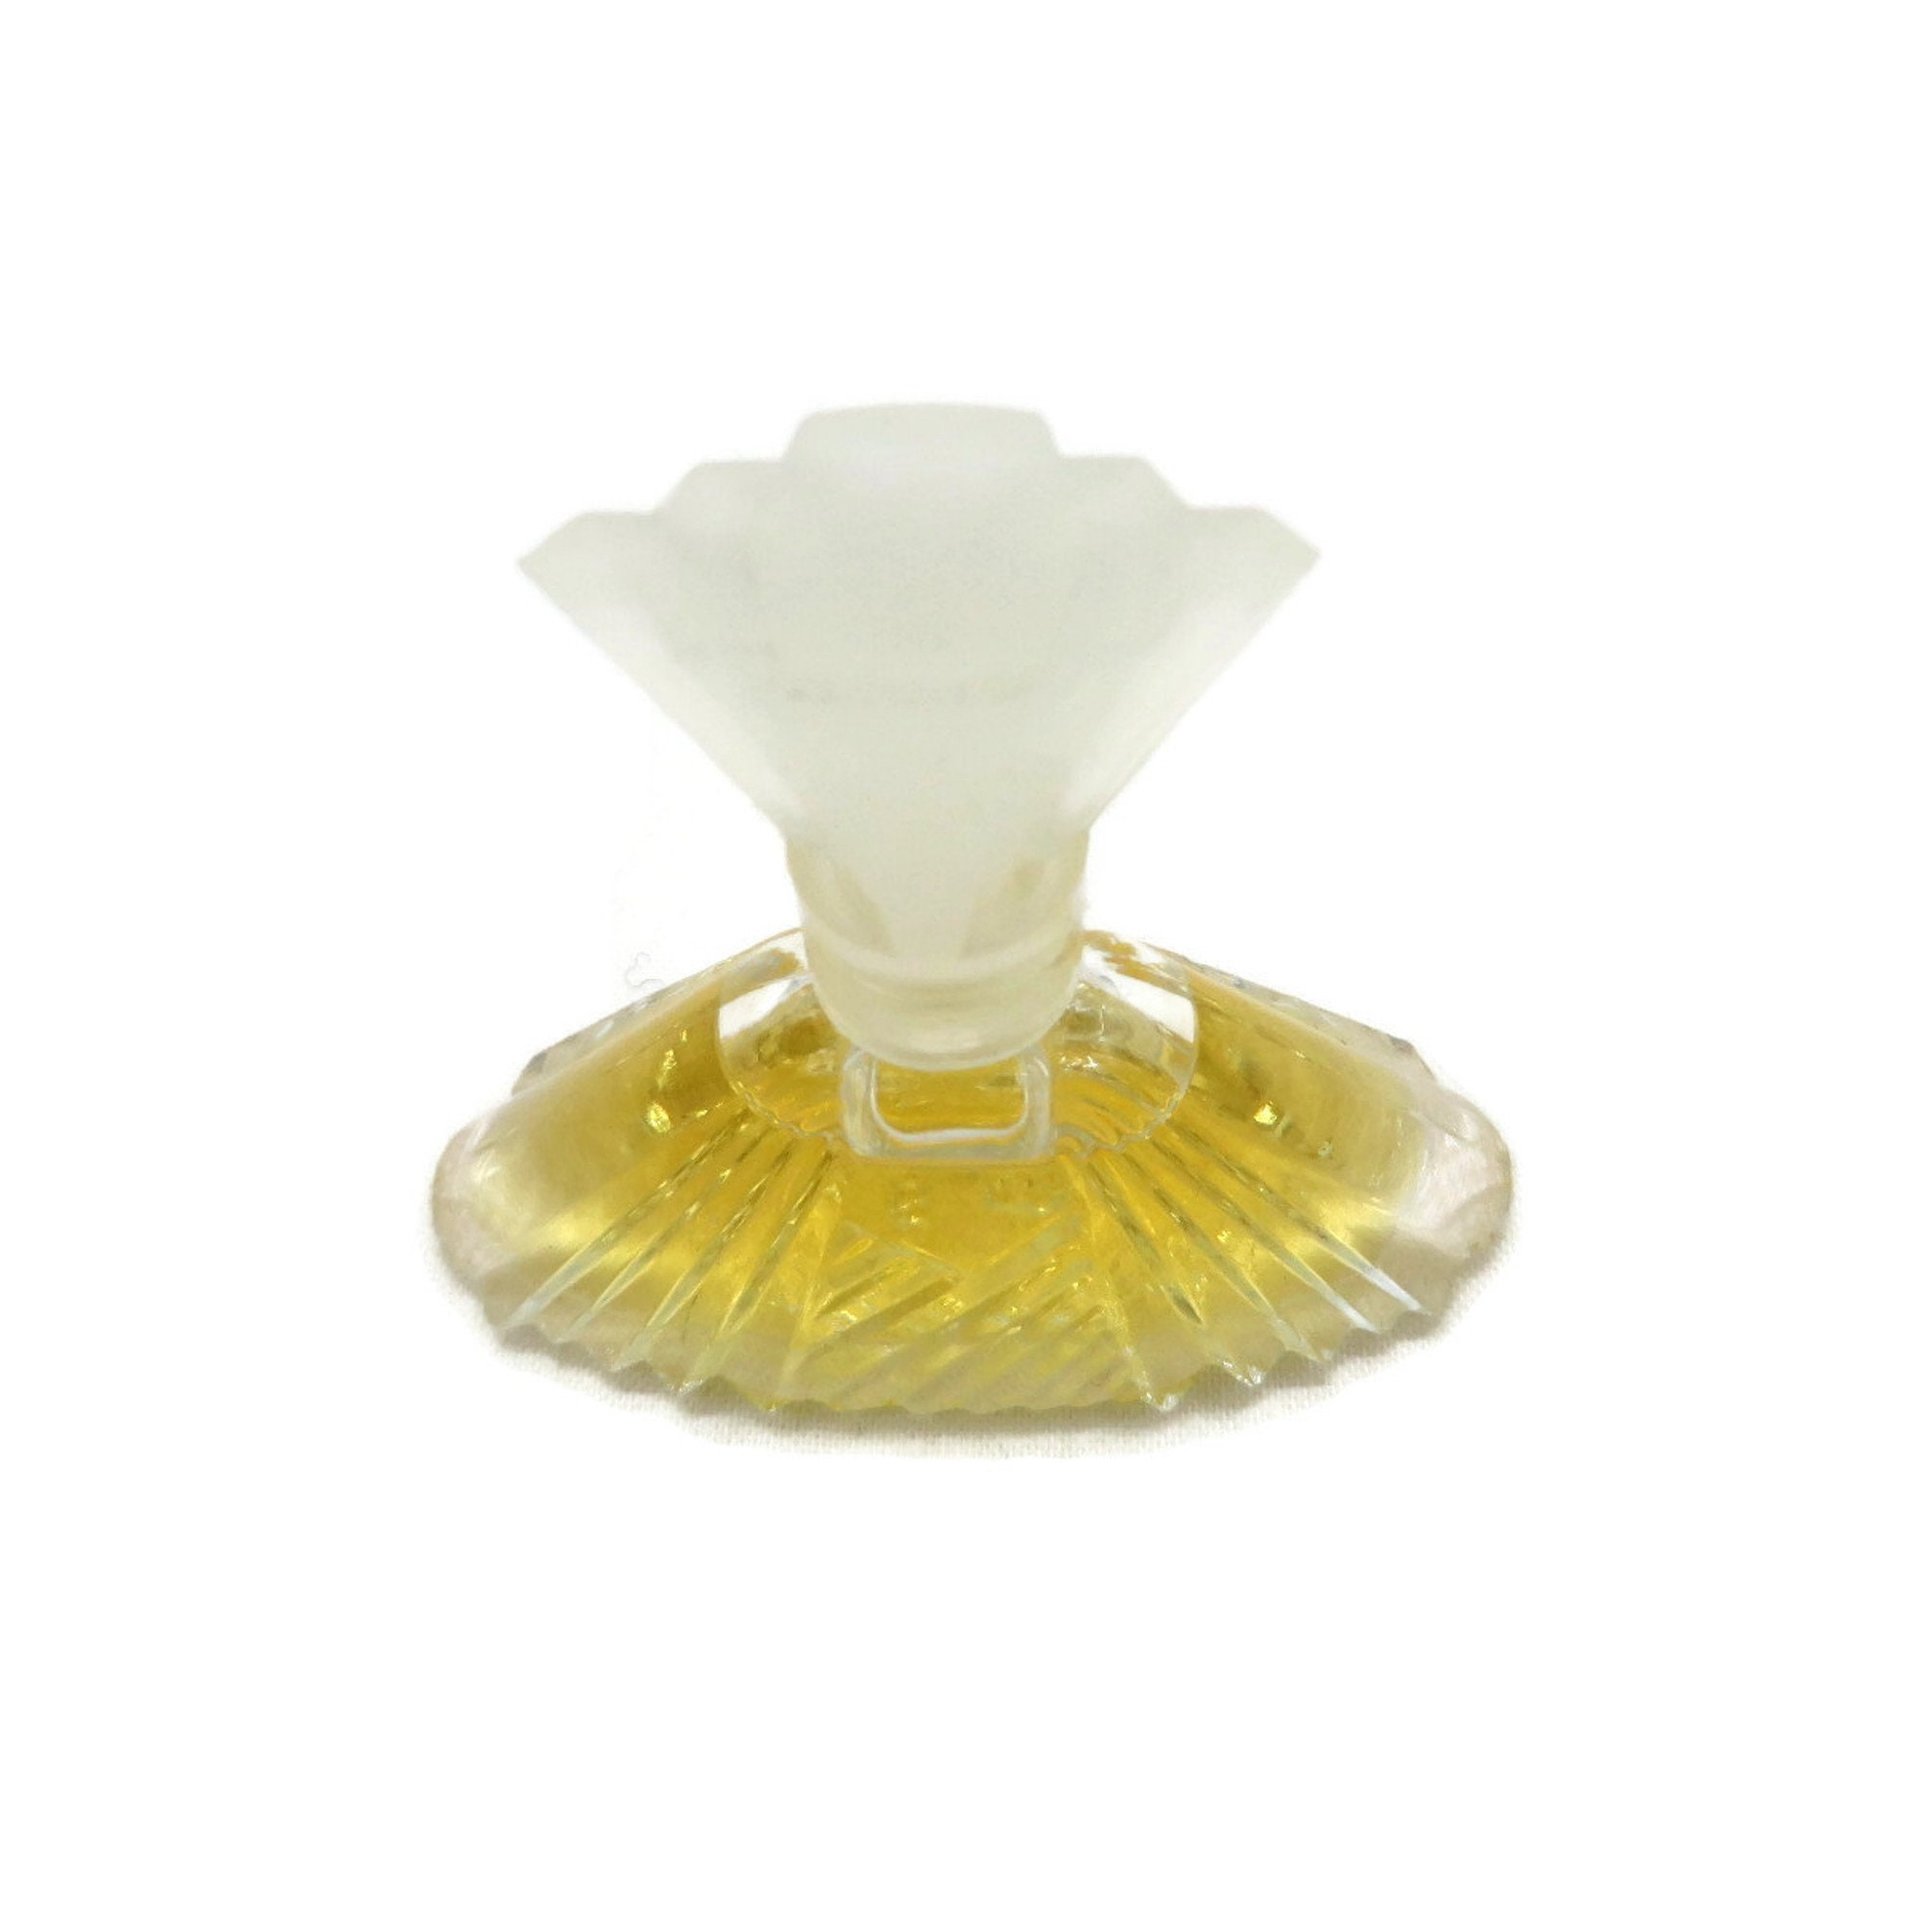 Tita Rossi Miniature Perfume, Small Travel Size, 5 ml, Vintage